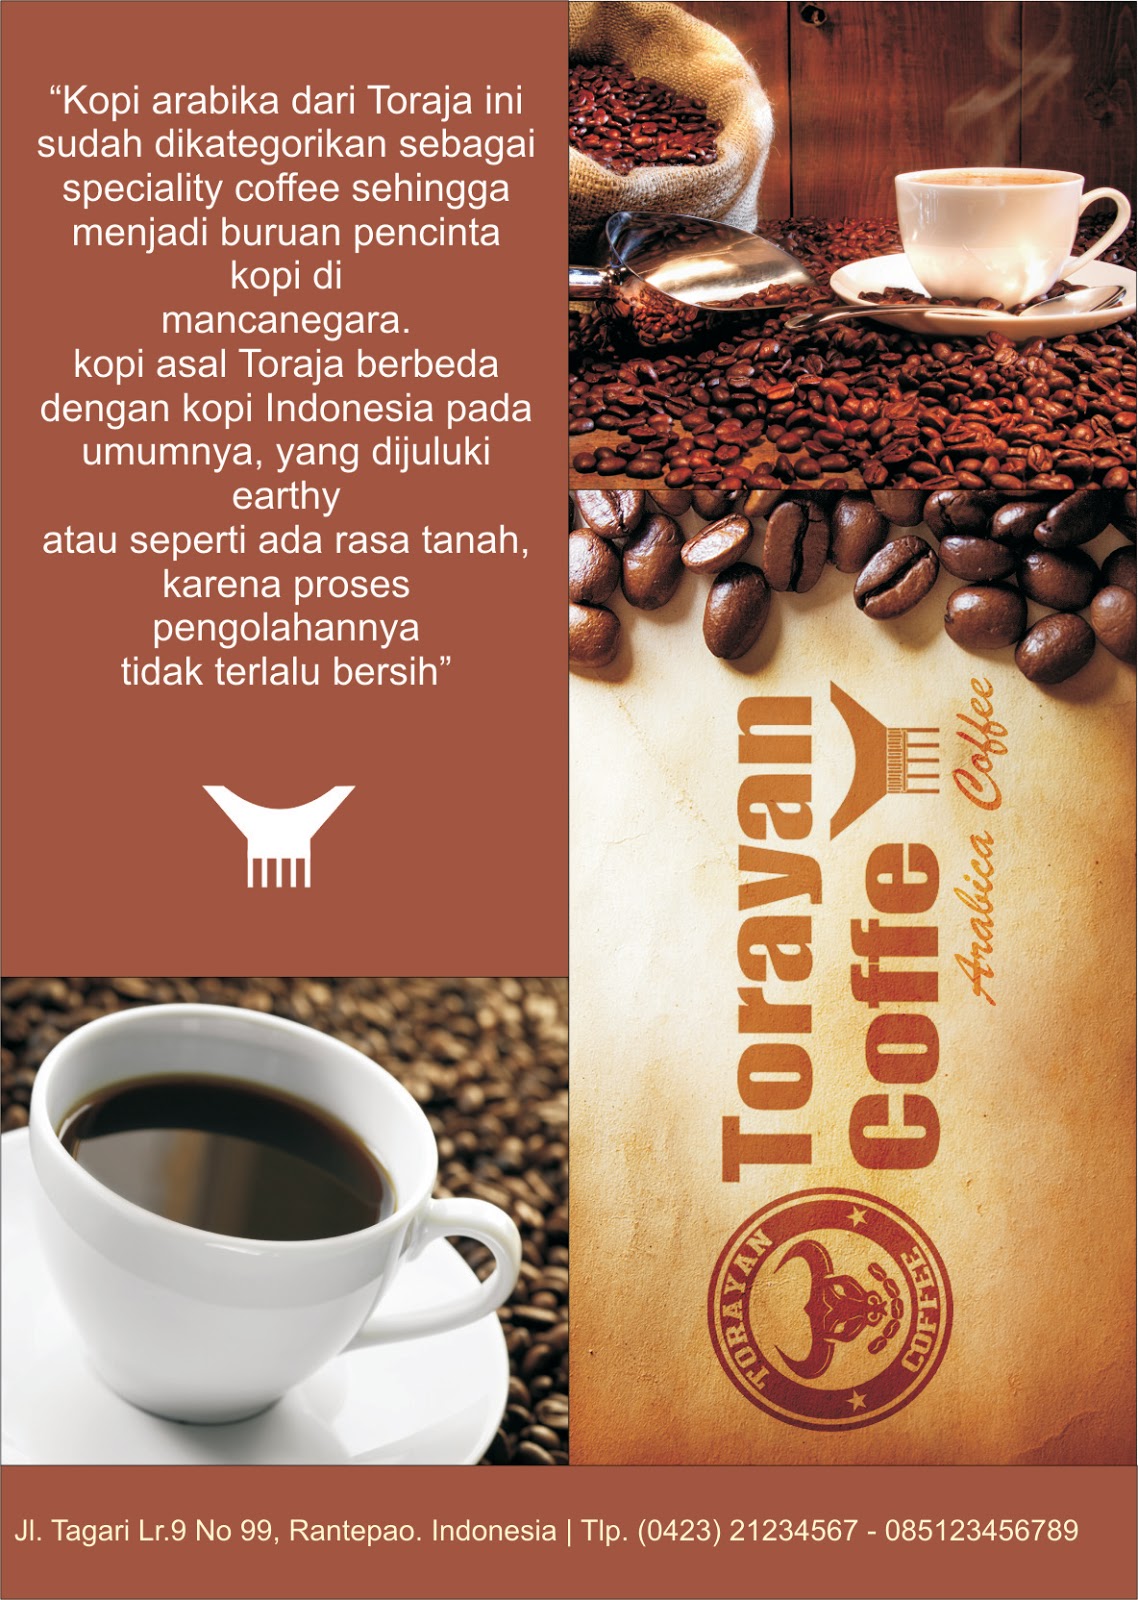 Torayan coffee: Brosur